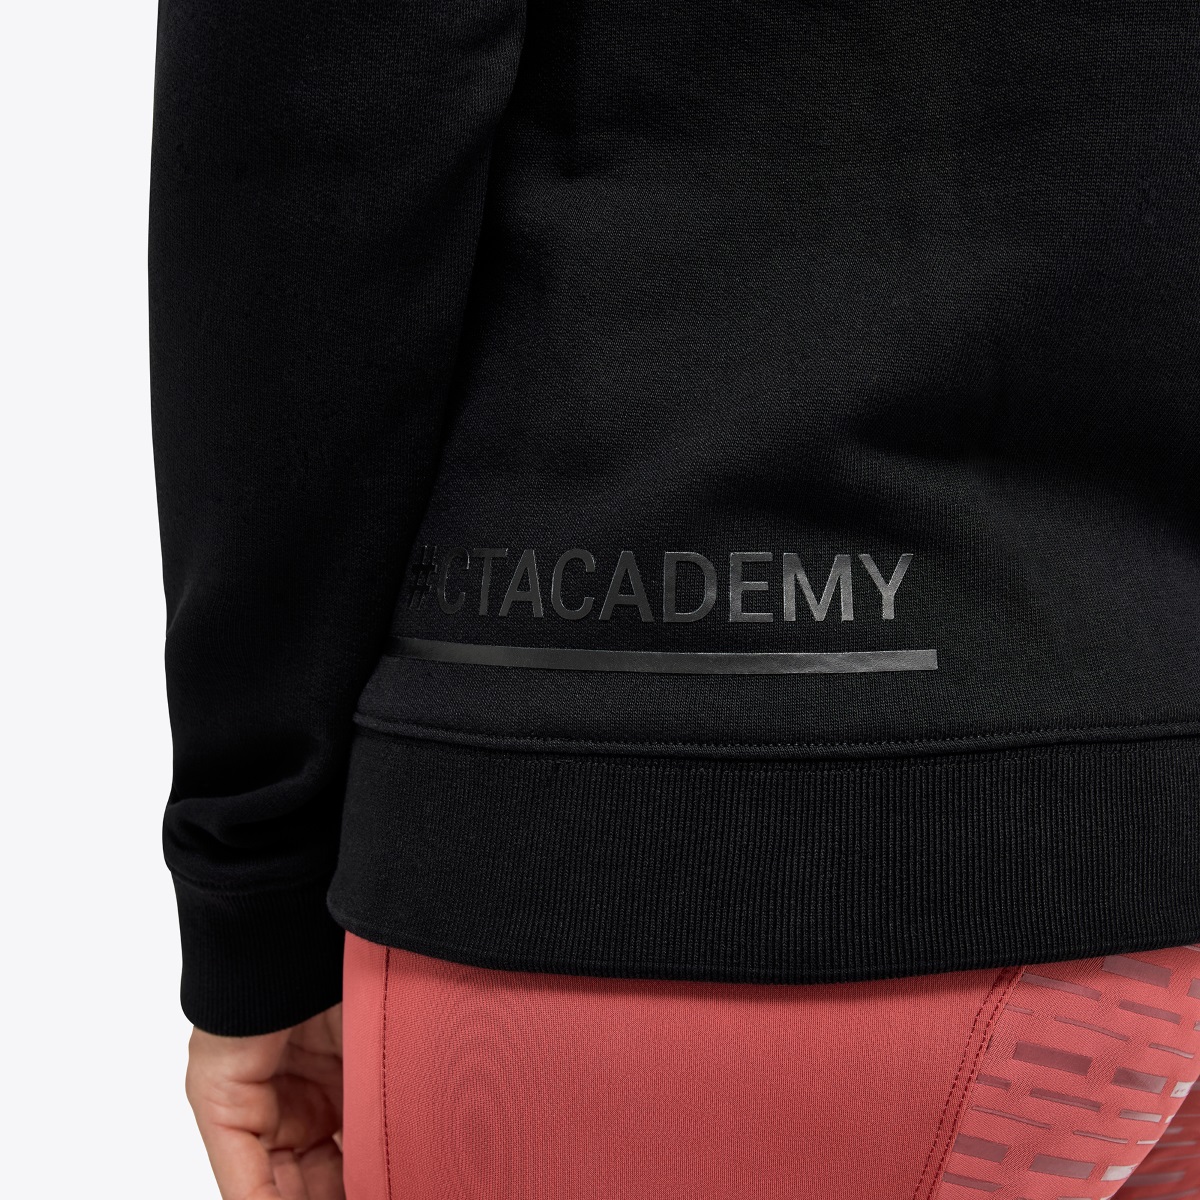 CAVALLERIA TOSCANA Academy Damen Sweatshirt Trainingsshirt - black - XL - 6